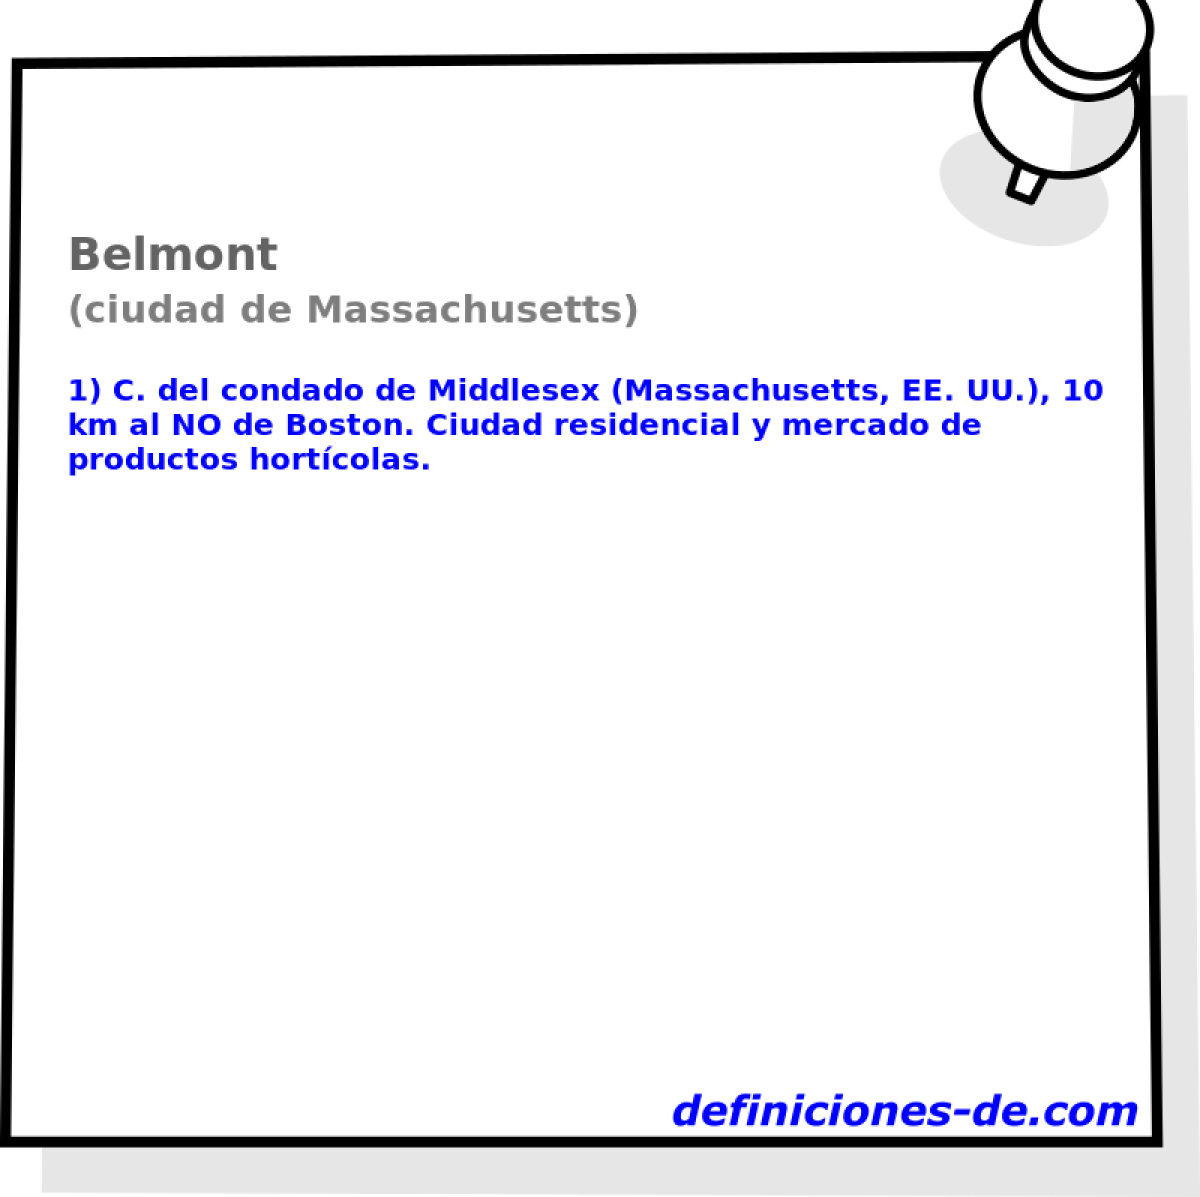 Belmont (ciudad de Massachusetts)